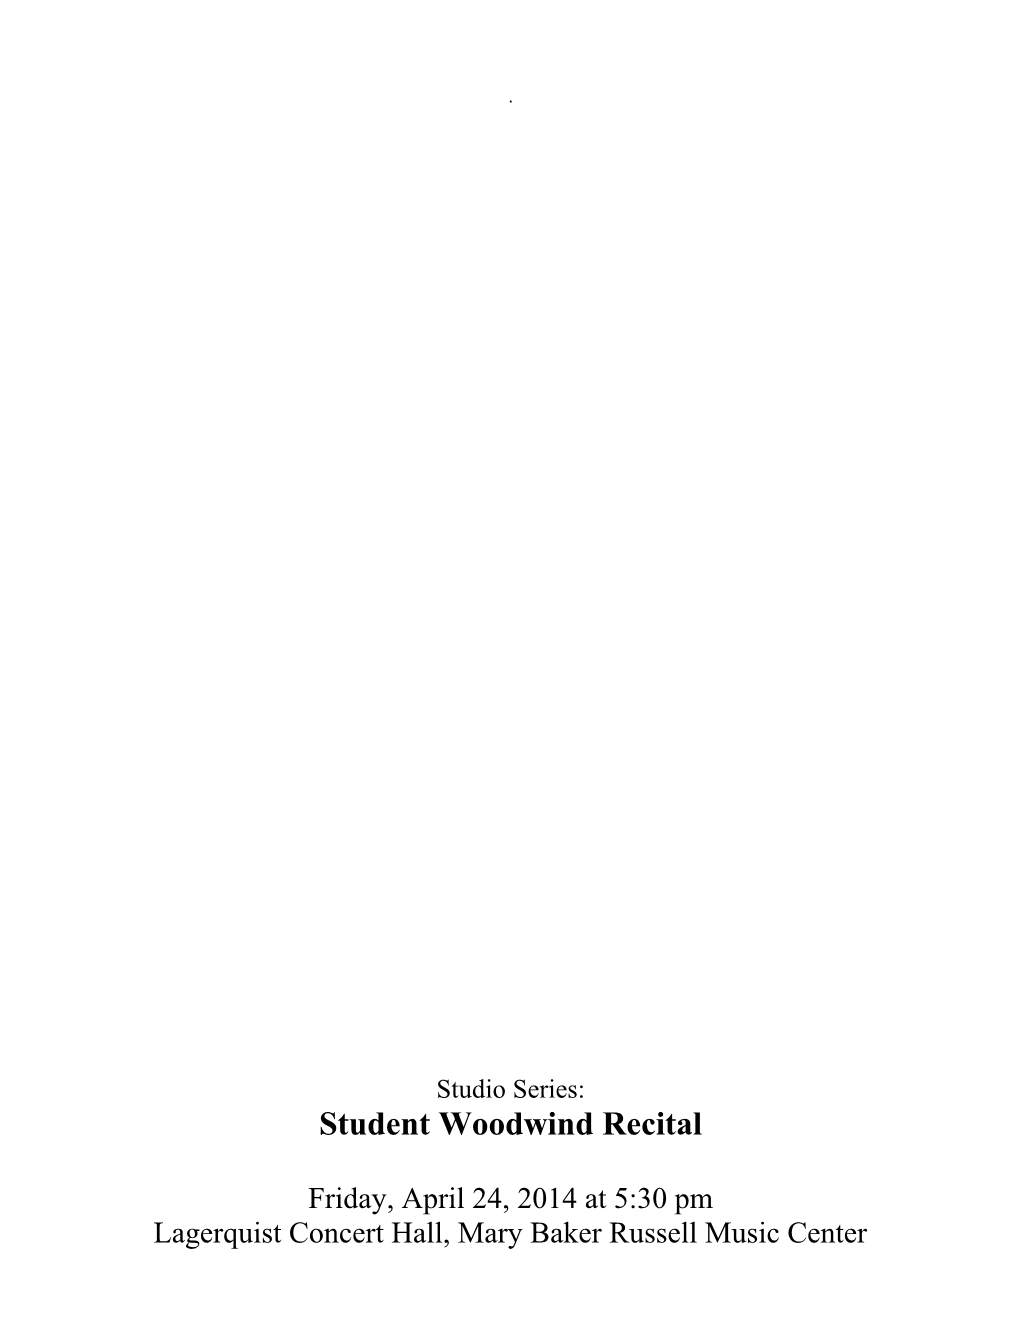 Student Woodwind Recital